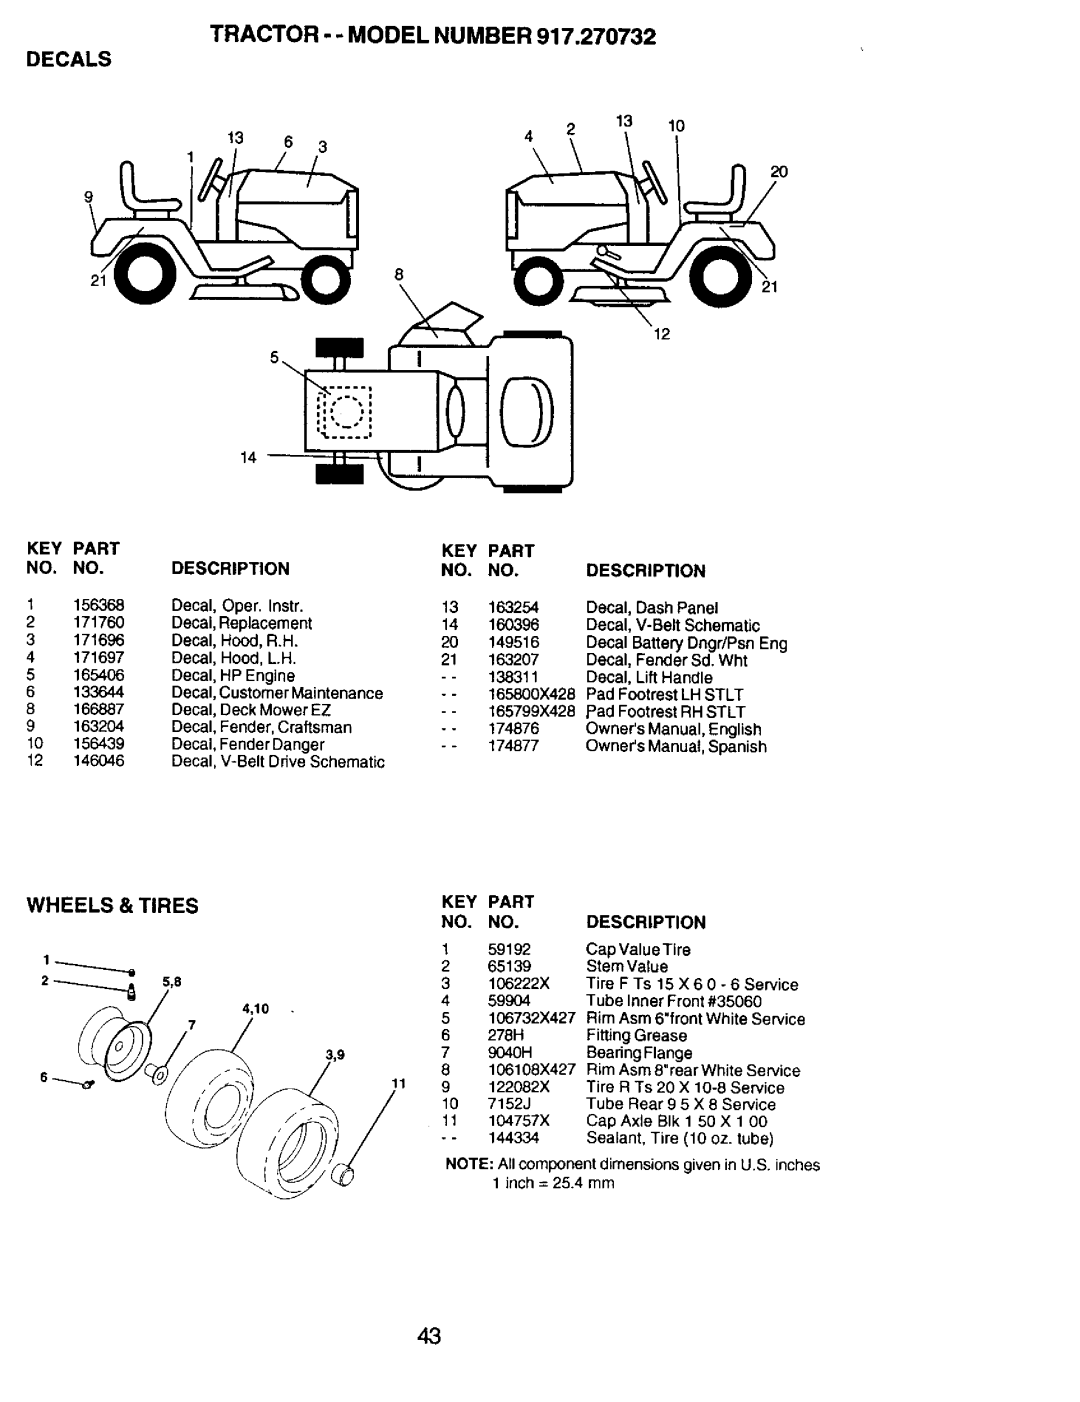 Craftsman 917.270732 owner manual Tractor - - Model Number, Decals, Wheels, Tires 